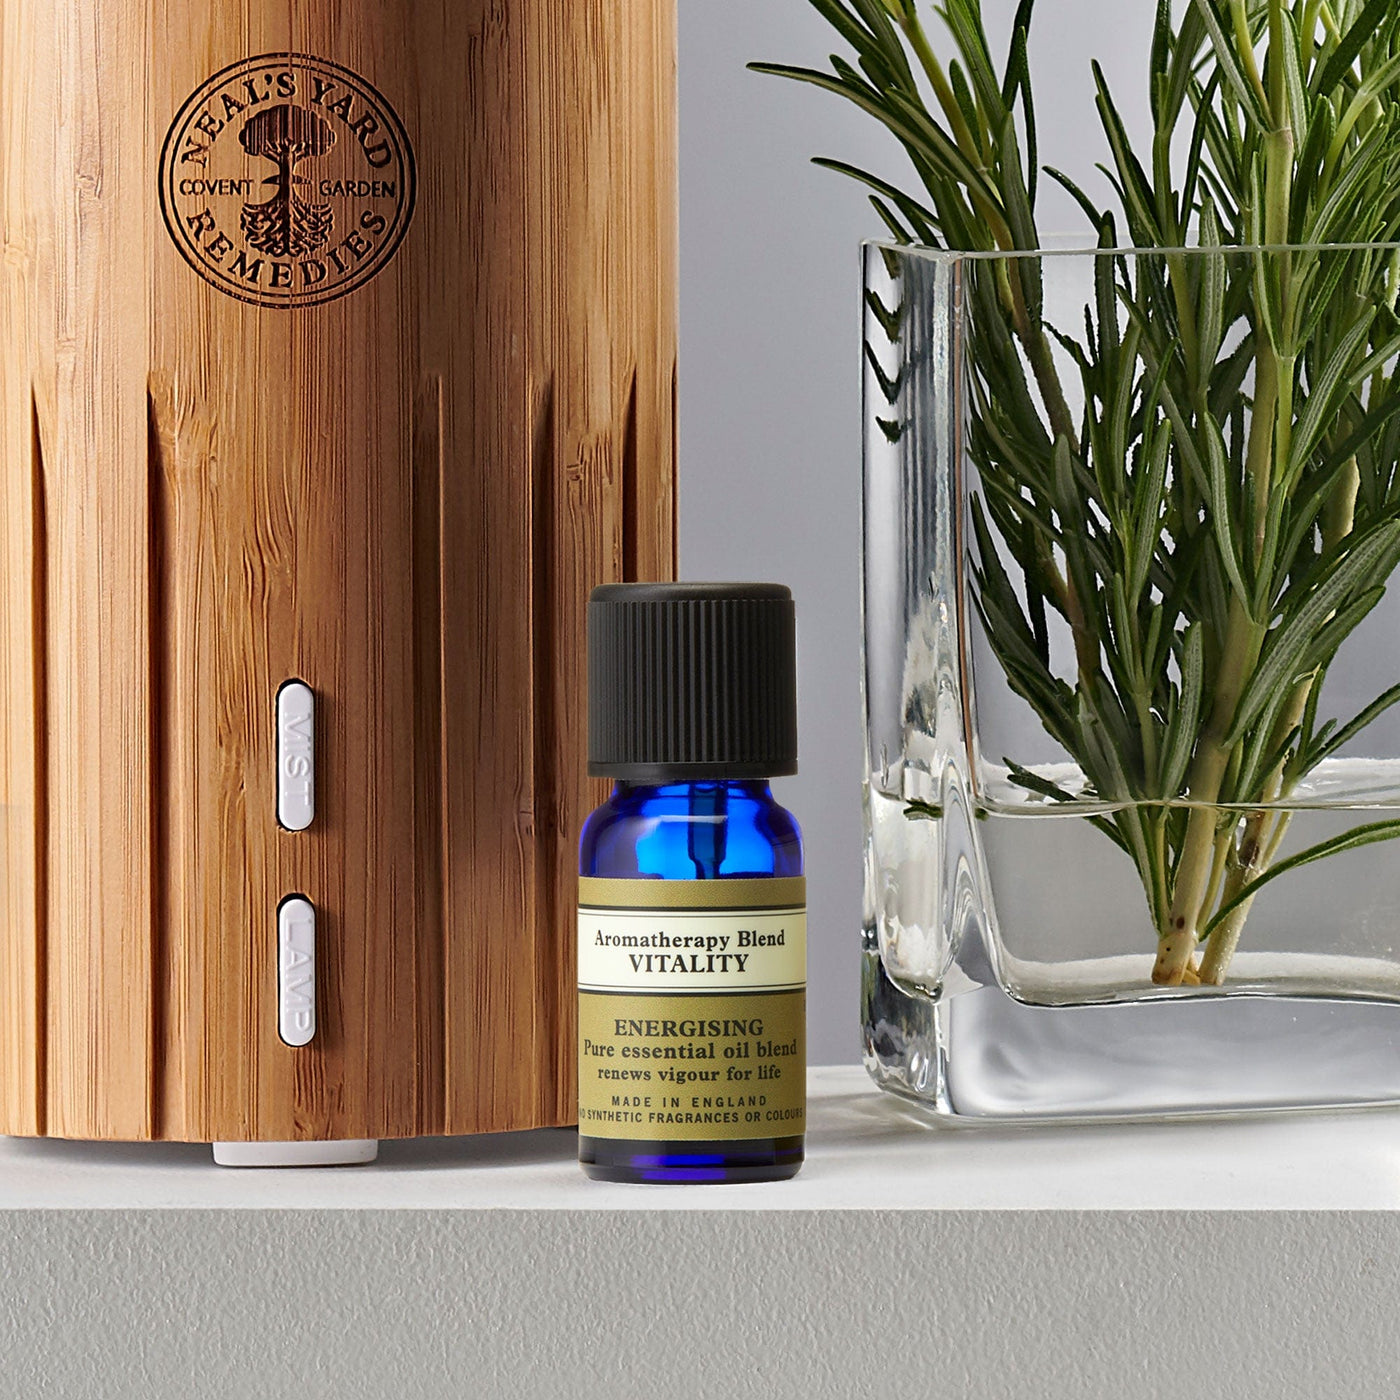 Neal's Yard Remedies Aromatherapy Blend - Vitality 10ml